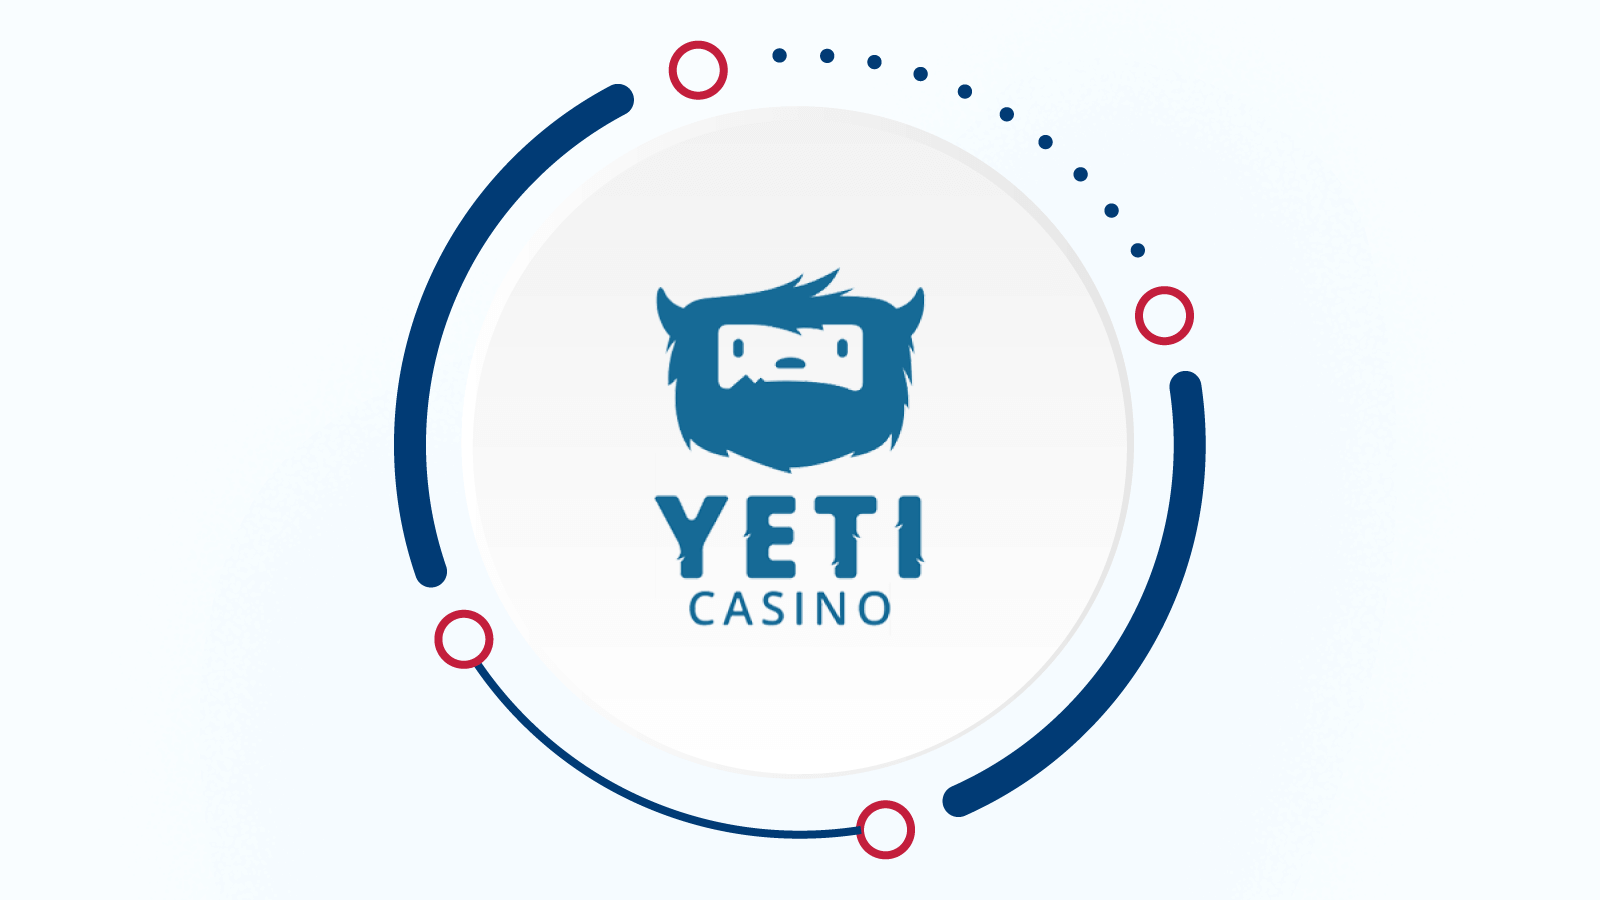 Up to ¥111 Refund Bonus at Yeti Casino The highest low deposit cashback bonus